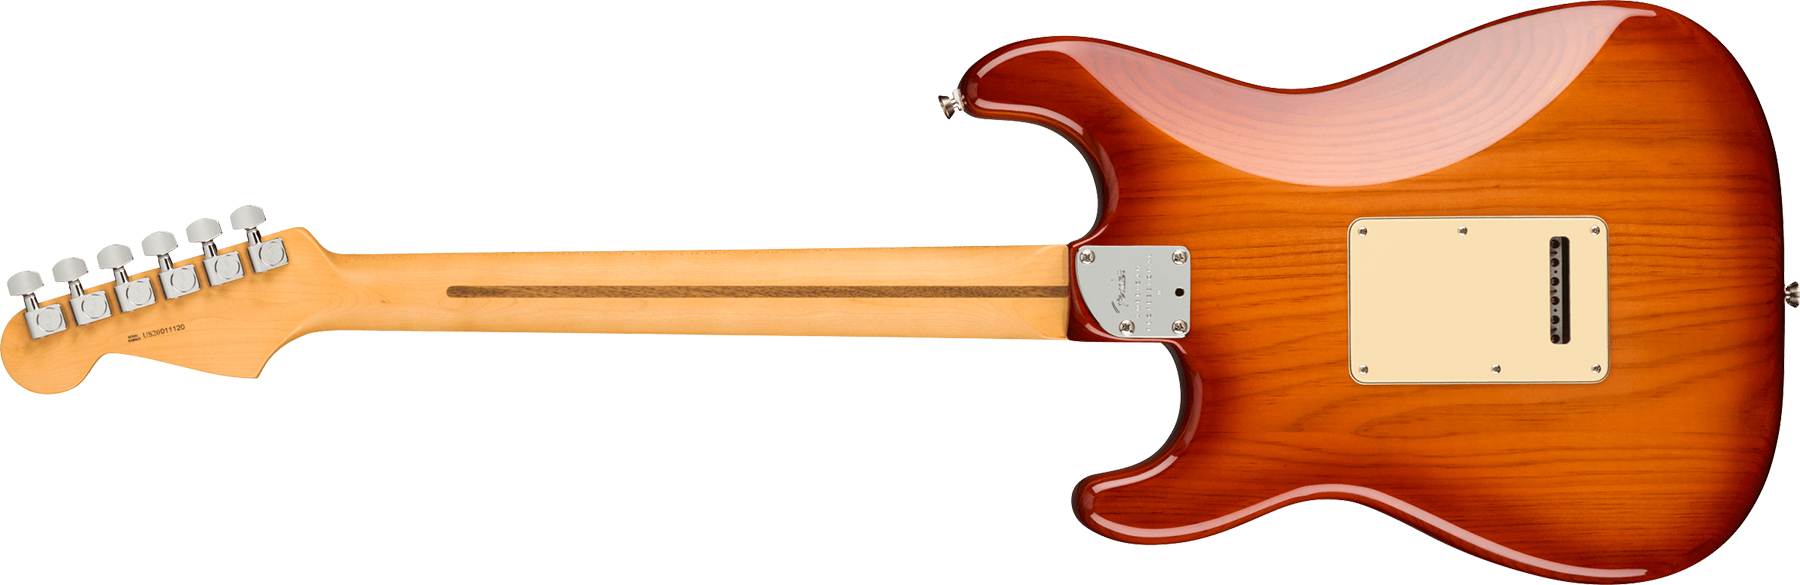 Fender Strat American Professional Ii Hss Usa Mn - Sienna Sunburst - E-Gitarre in Str-Form - Variation 1